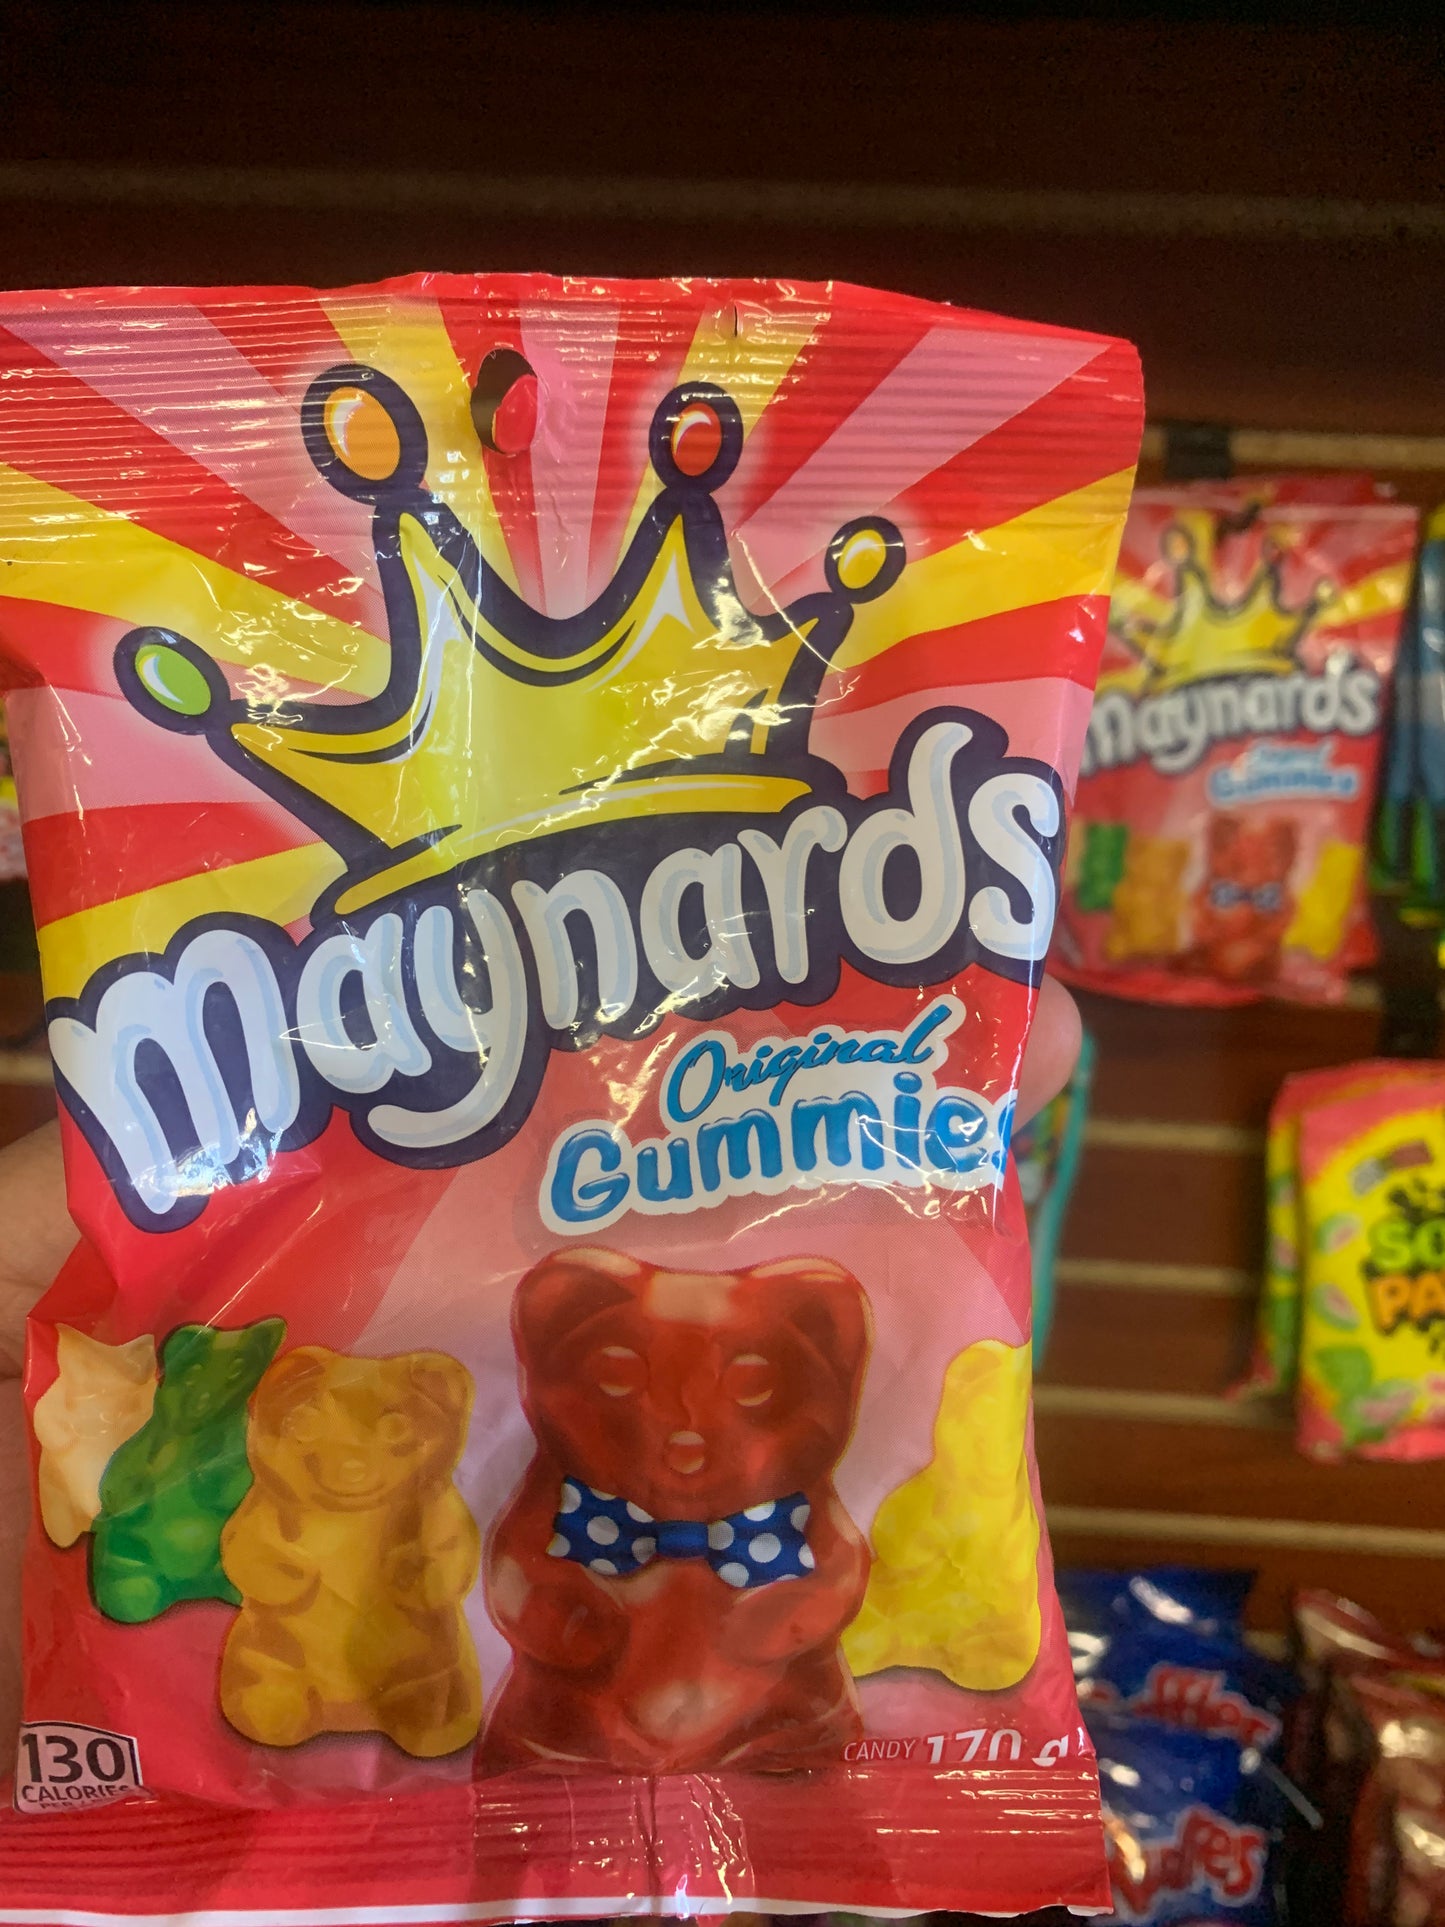 Maynard’s Original Gummy